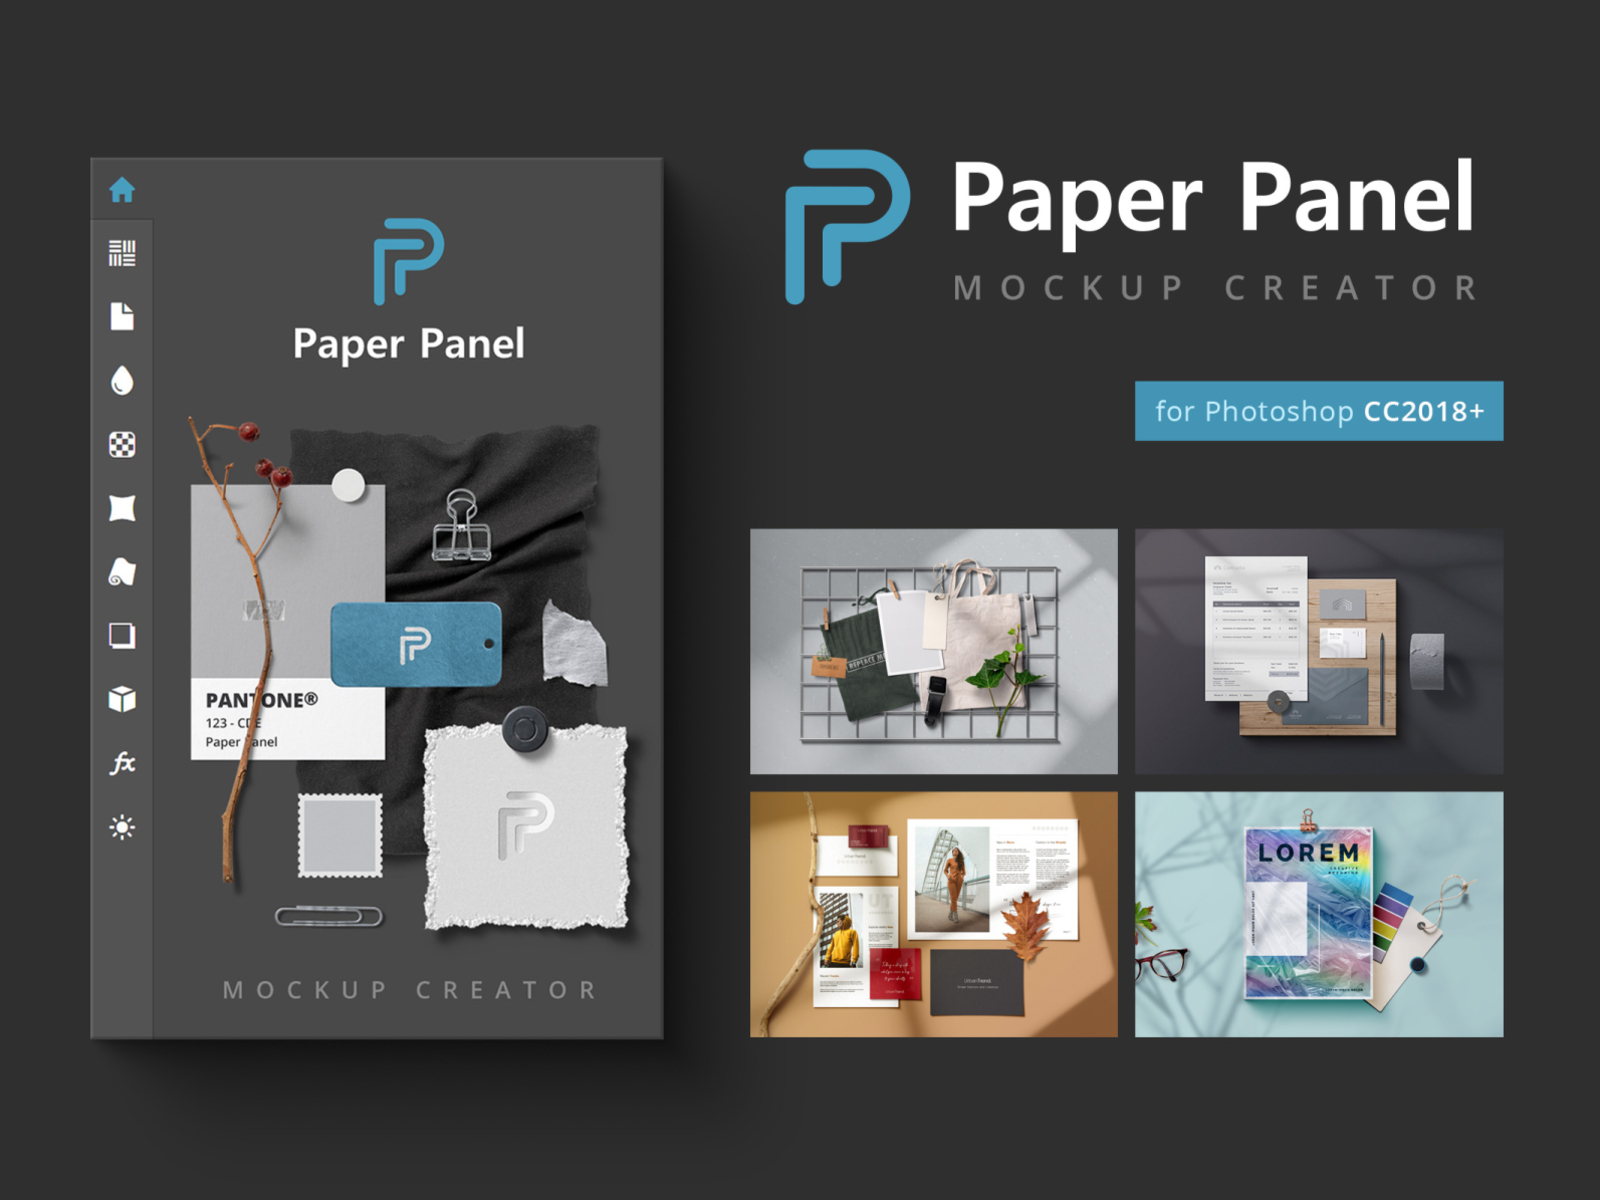 Download Paper Panel - Mockup Creator by Simon Henke on Dribbble